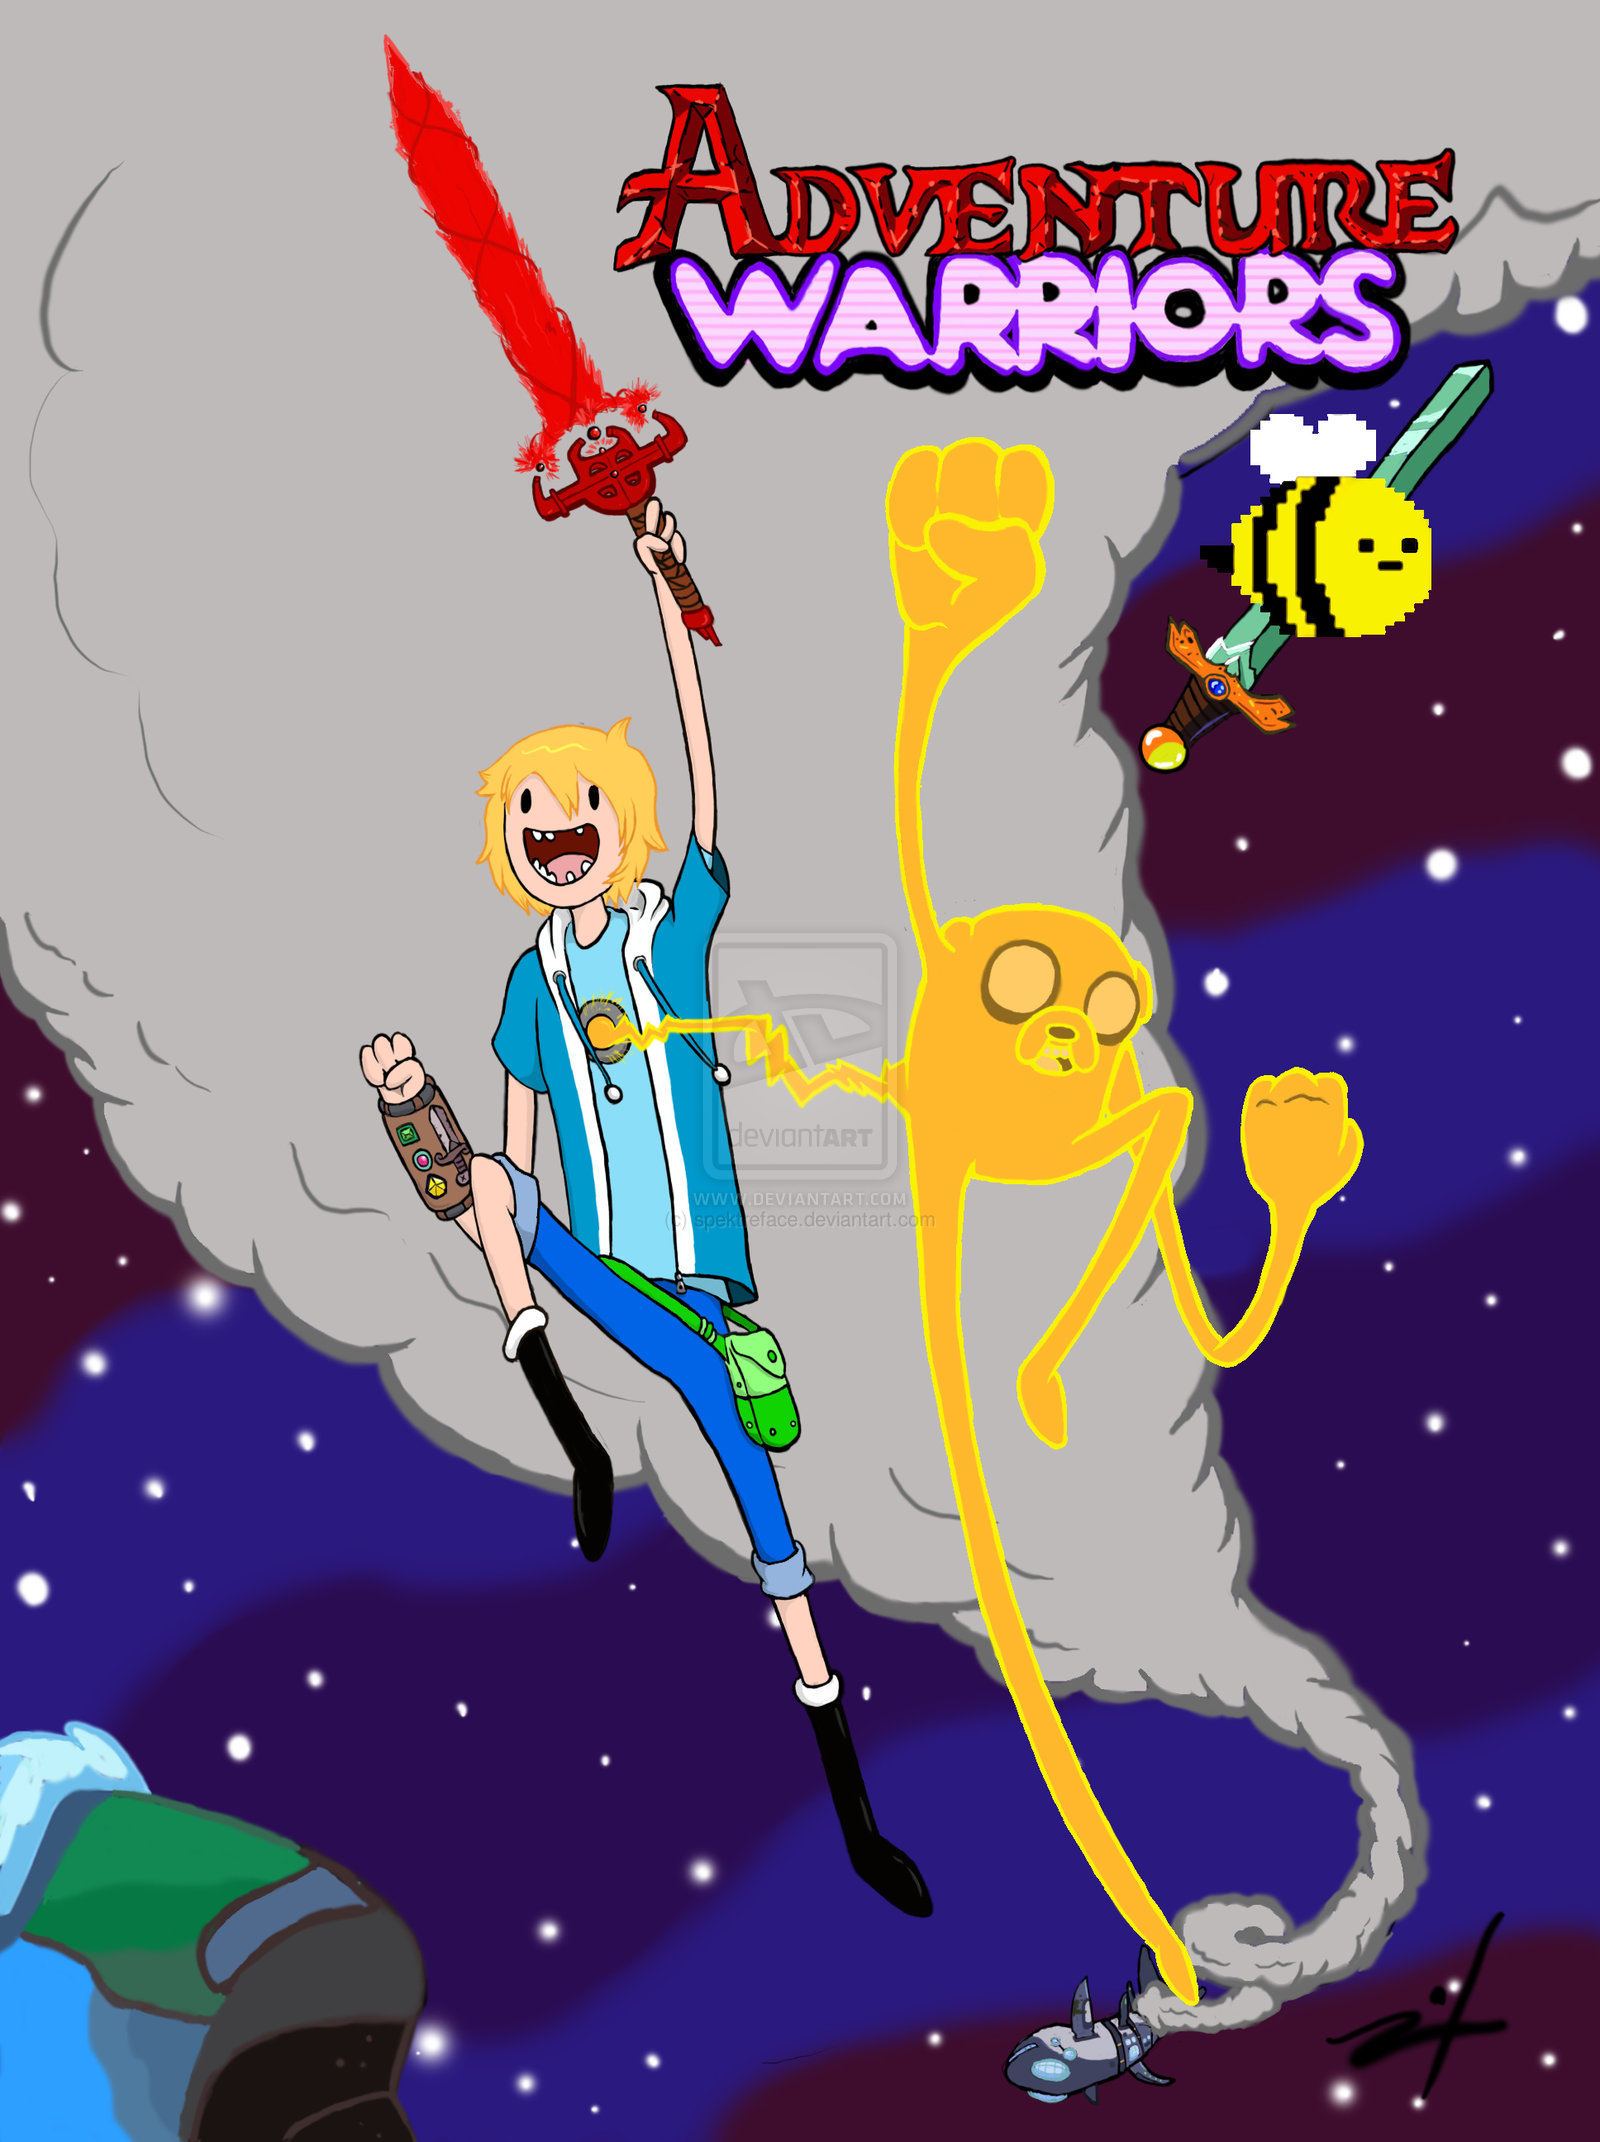 Bravest Warriors Wallpaper iPhone Adventure Warriorsby Tyceland